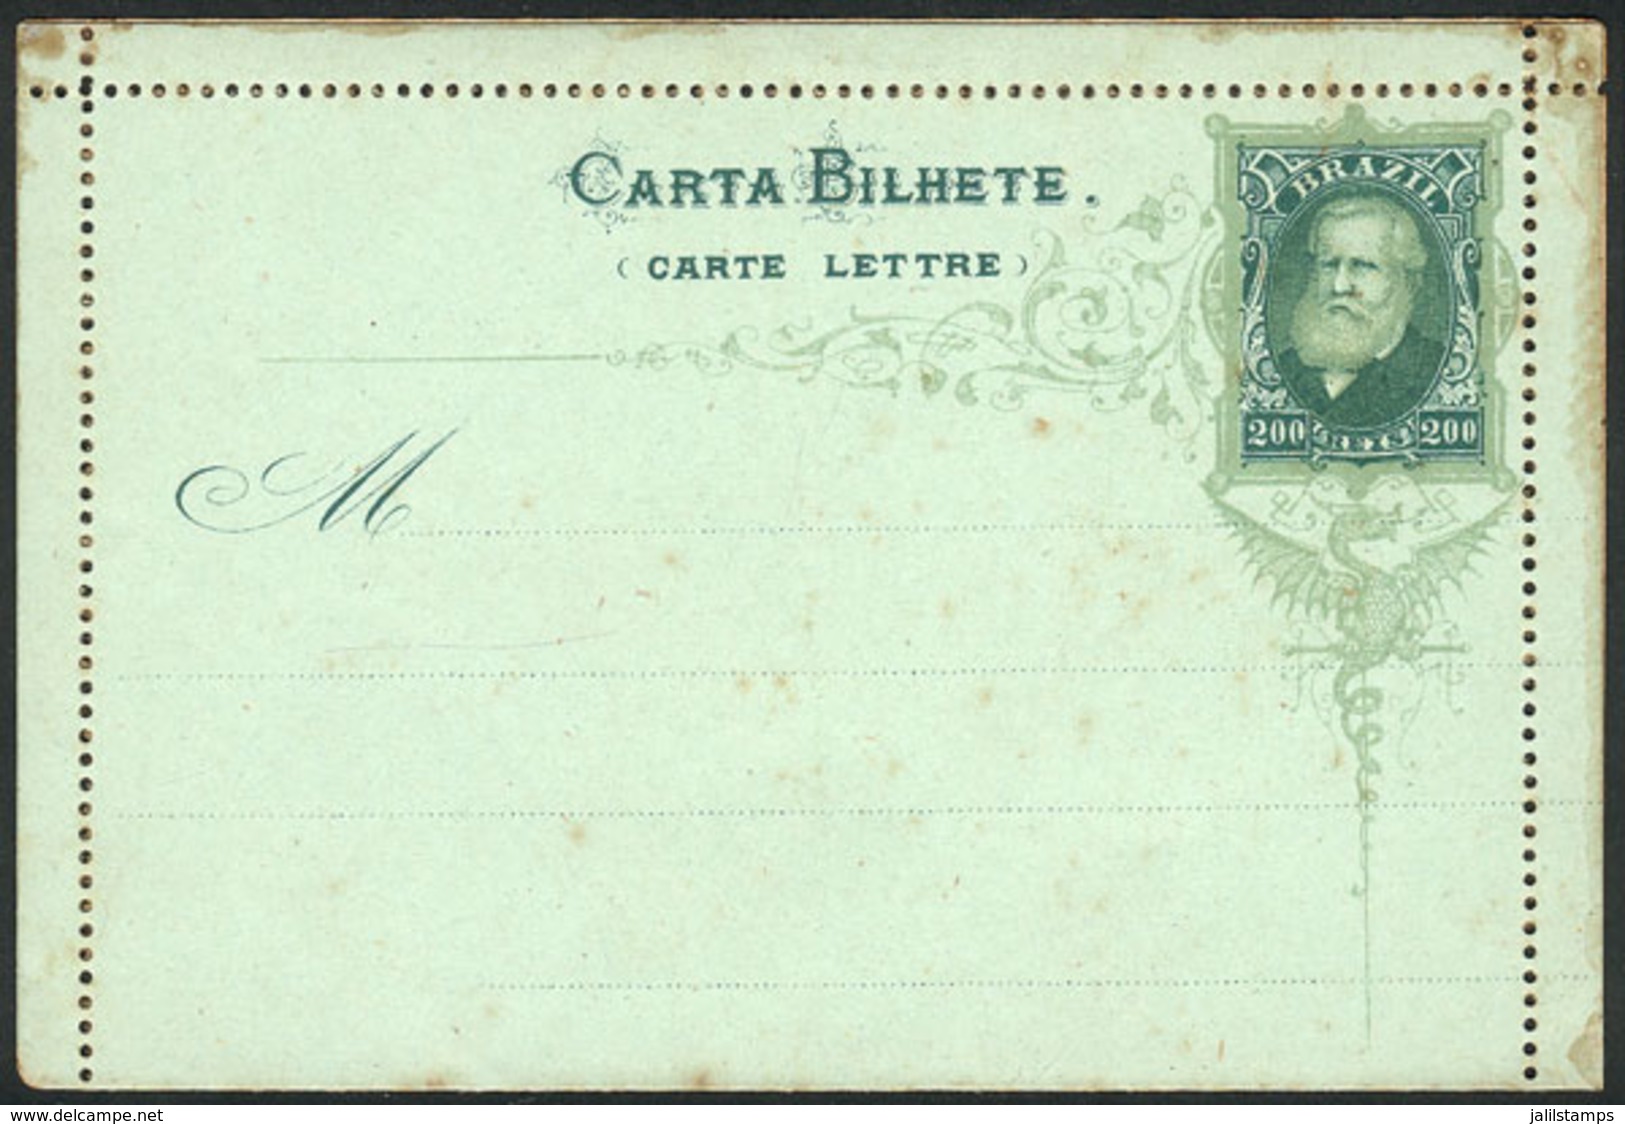 BRAZIL: RHM.CB-16, Unused Lettercard, Fine Quality, Catalog Value 1,200Rs. - Postal Stationery